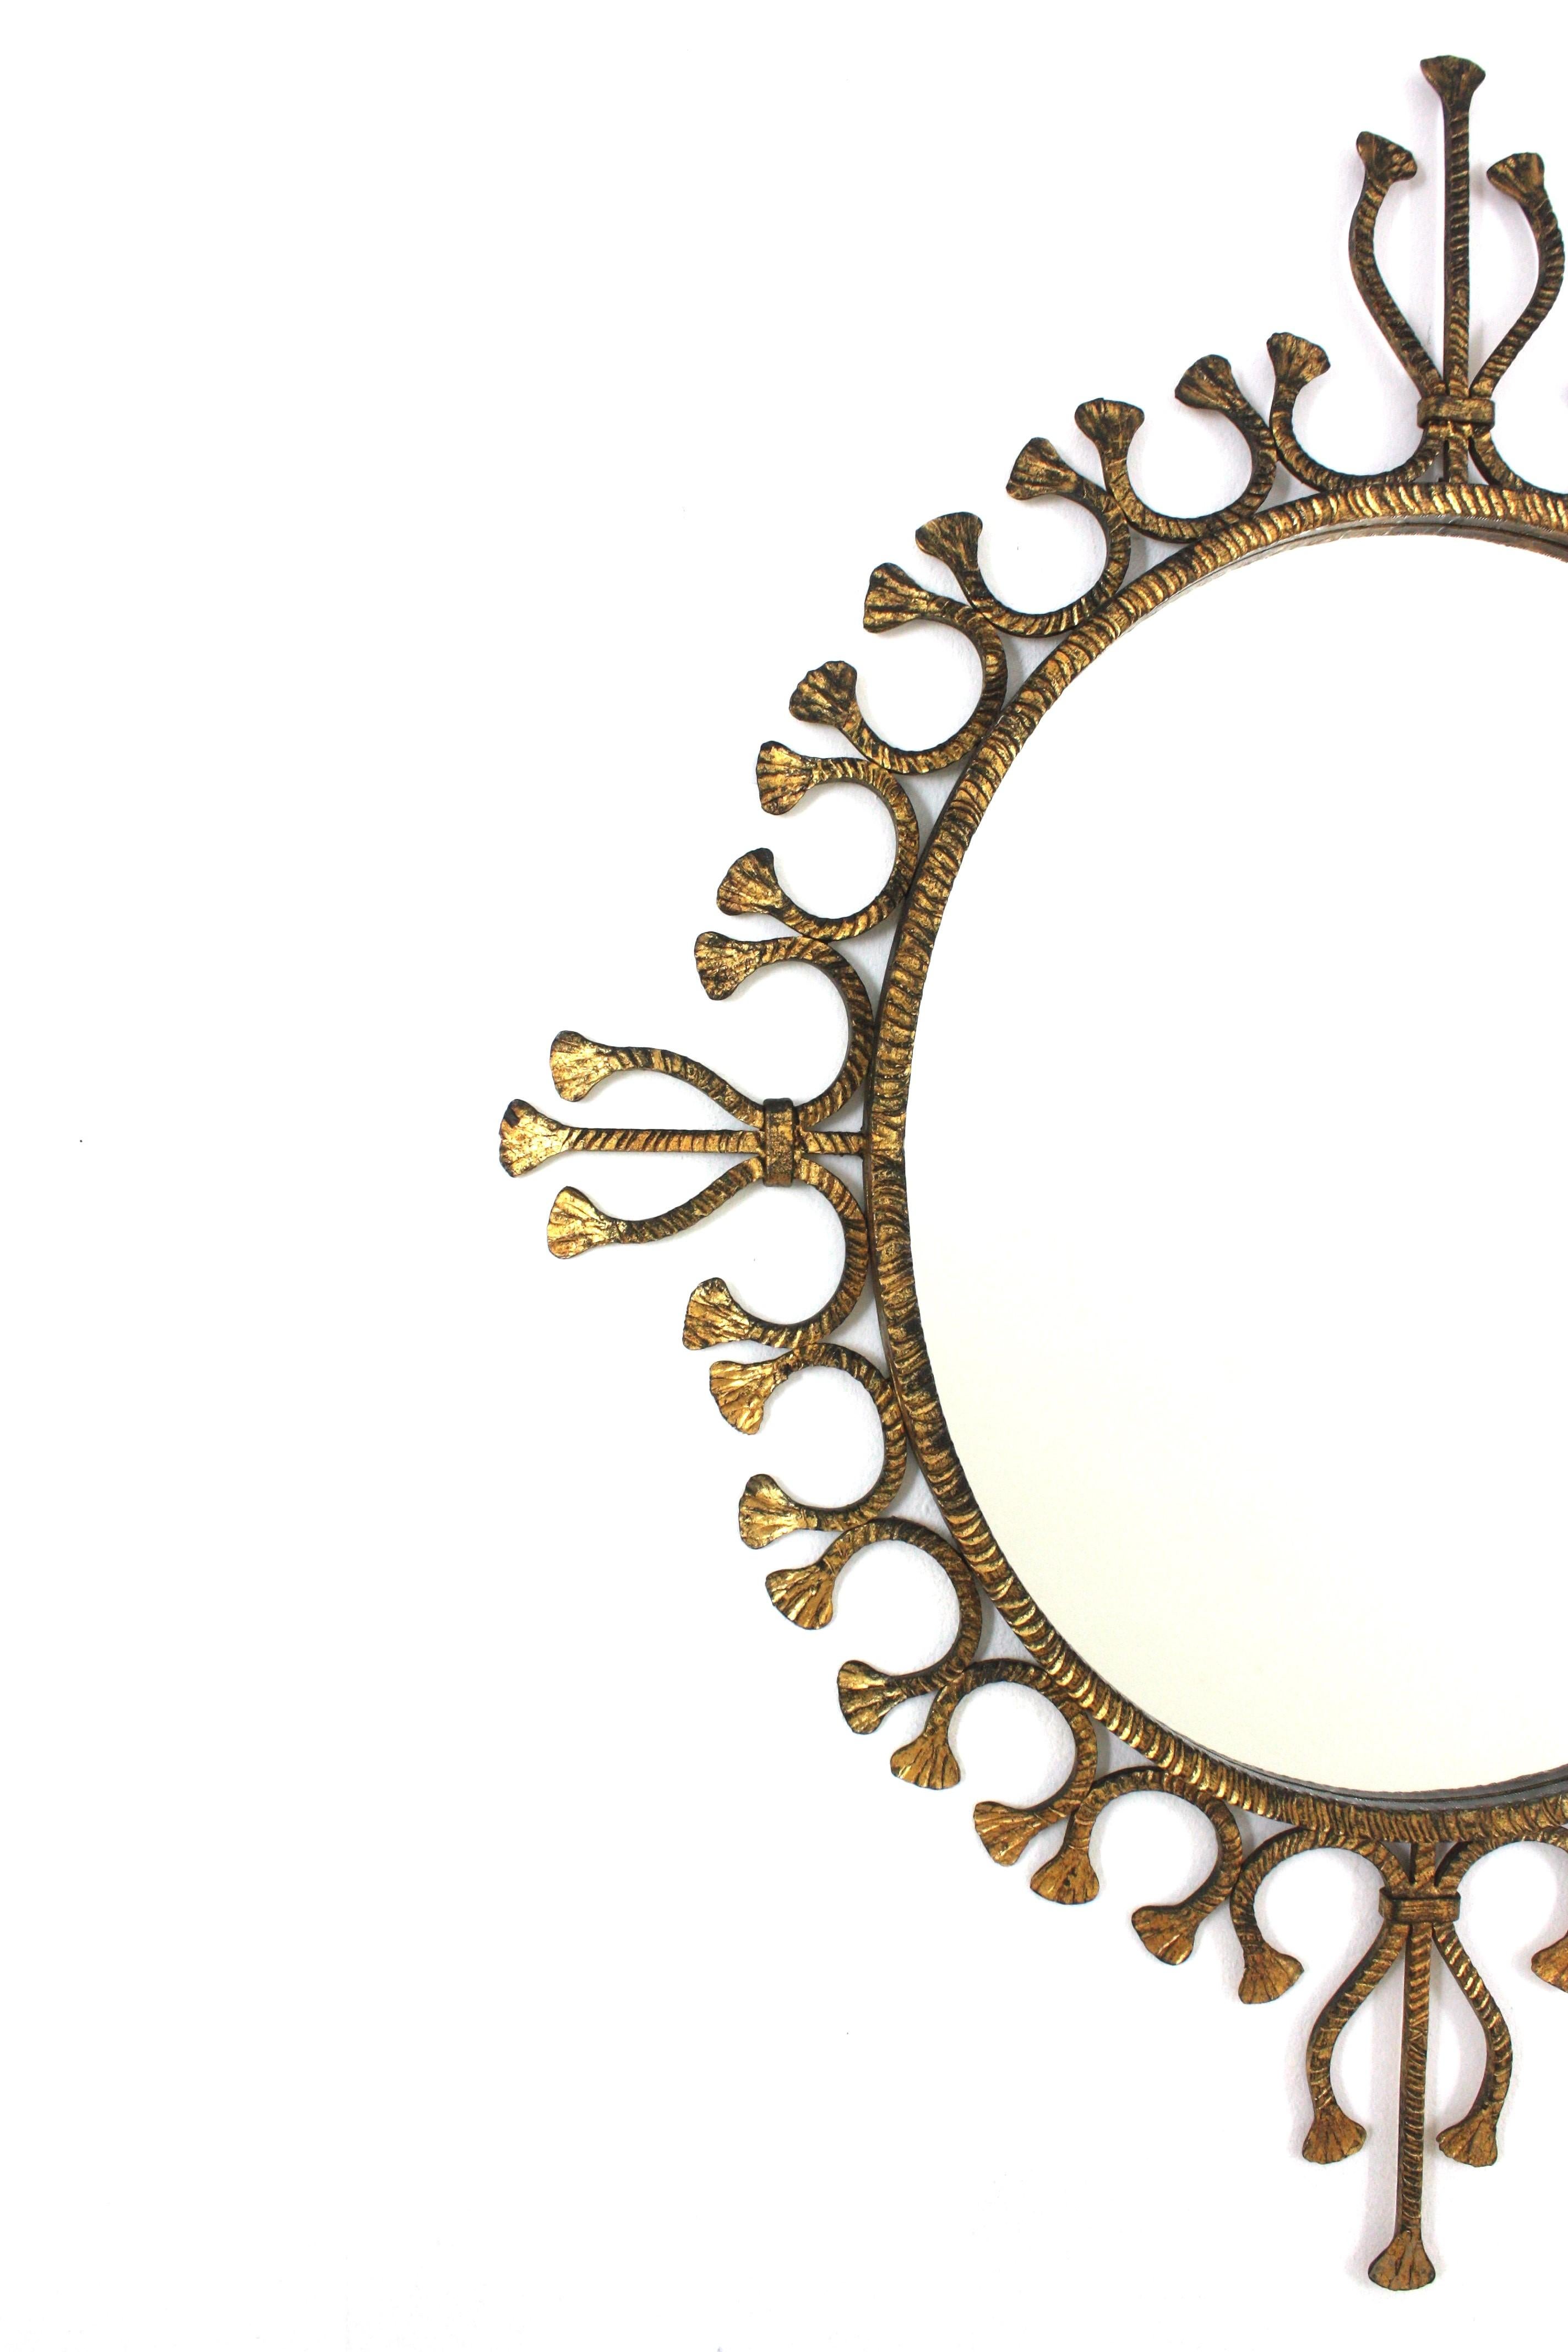 20th Century Spanish Hollywood Regency Gilt Wrought Iron Oval Sunburst Mirror / Wall Mirror For Sale